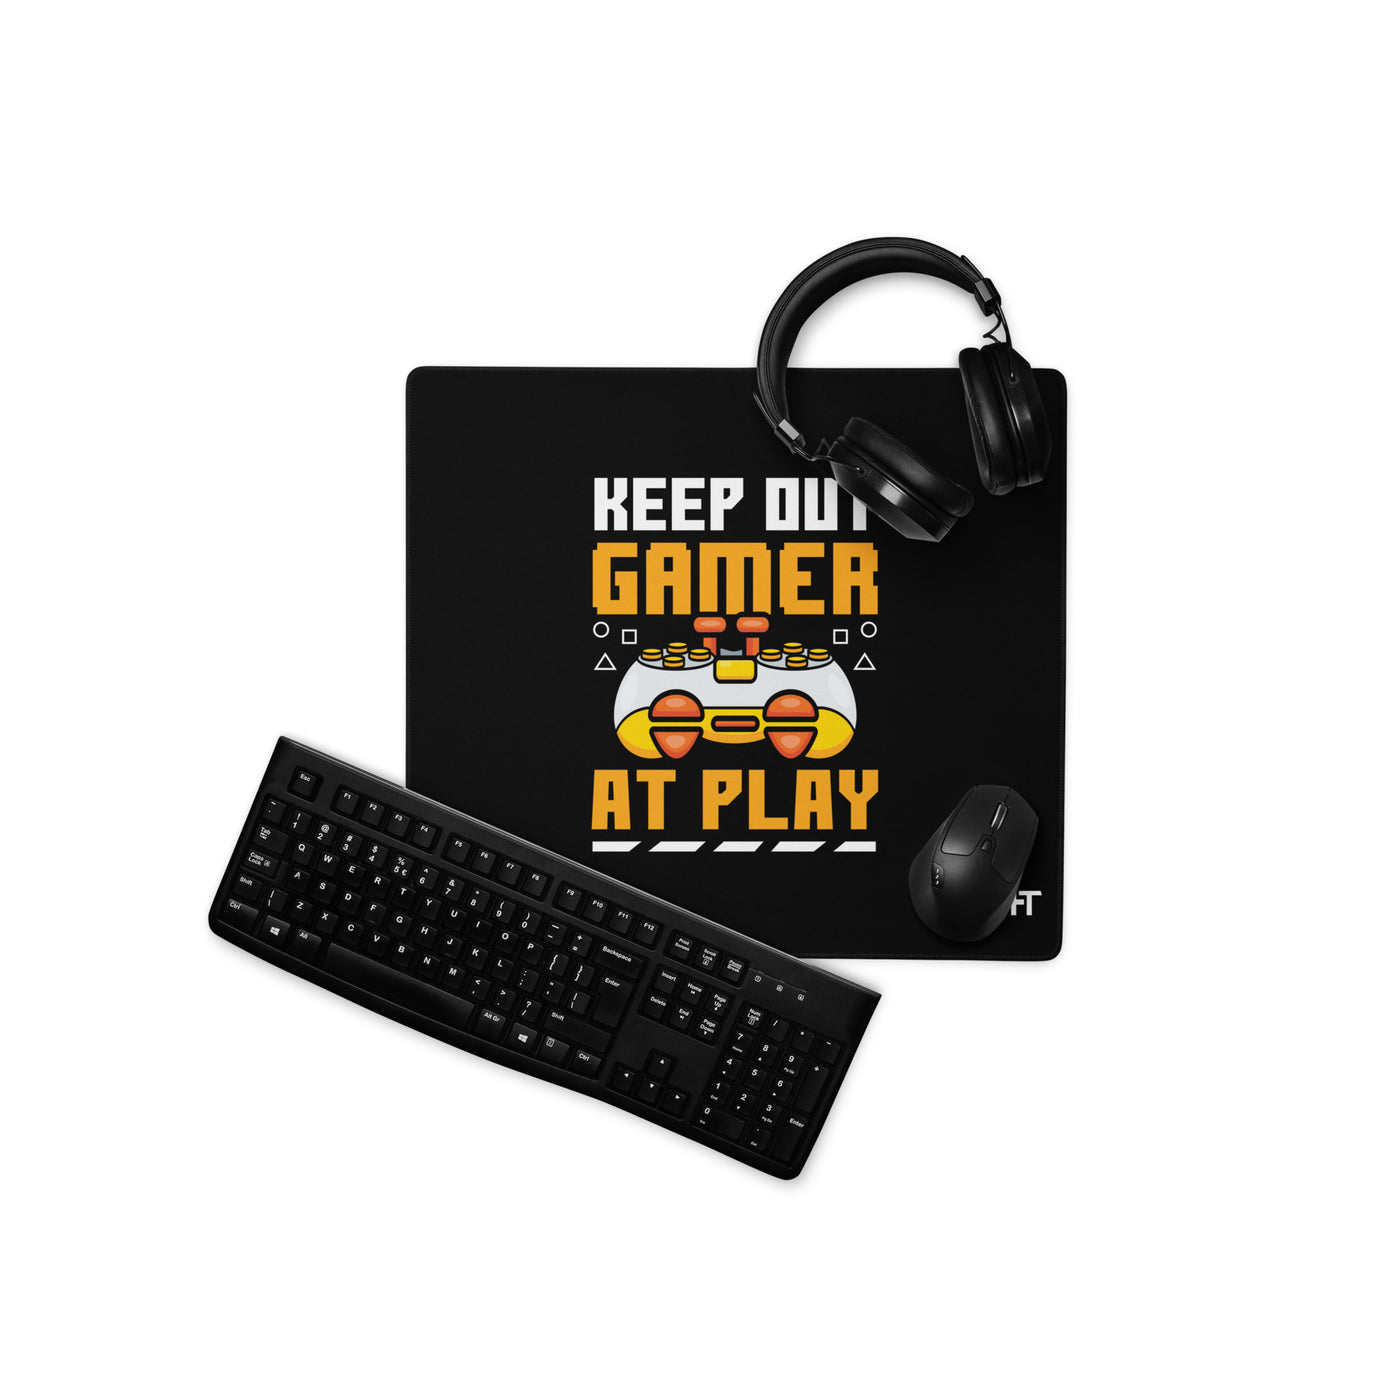 Keep Out Gamer At Play Rima 7 - Desk Mat